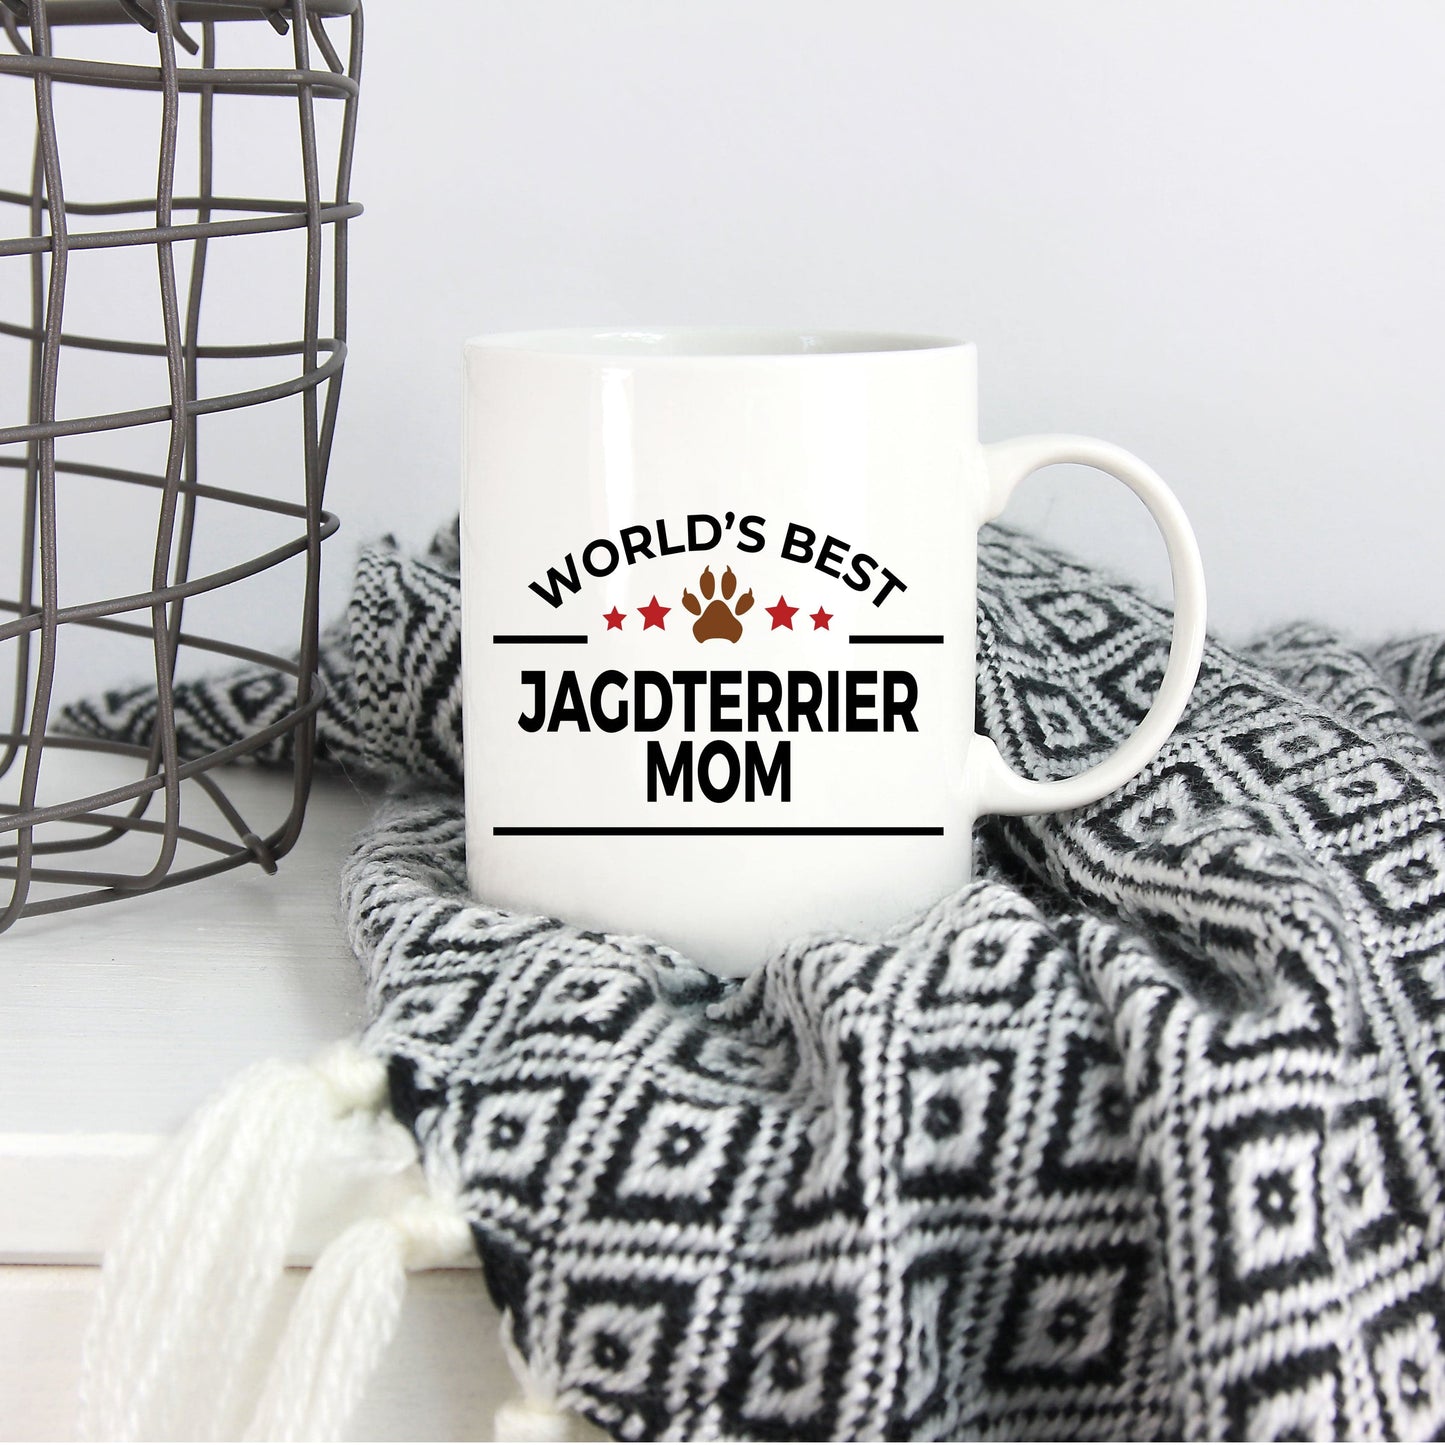 Jagdterrier Dog Lover Gift World's Best Mom Birthday Mother's Day White Ceramic Coffee Mug